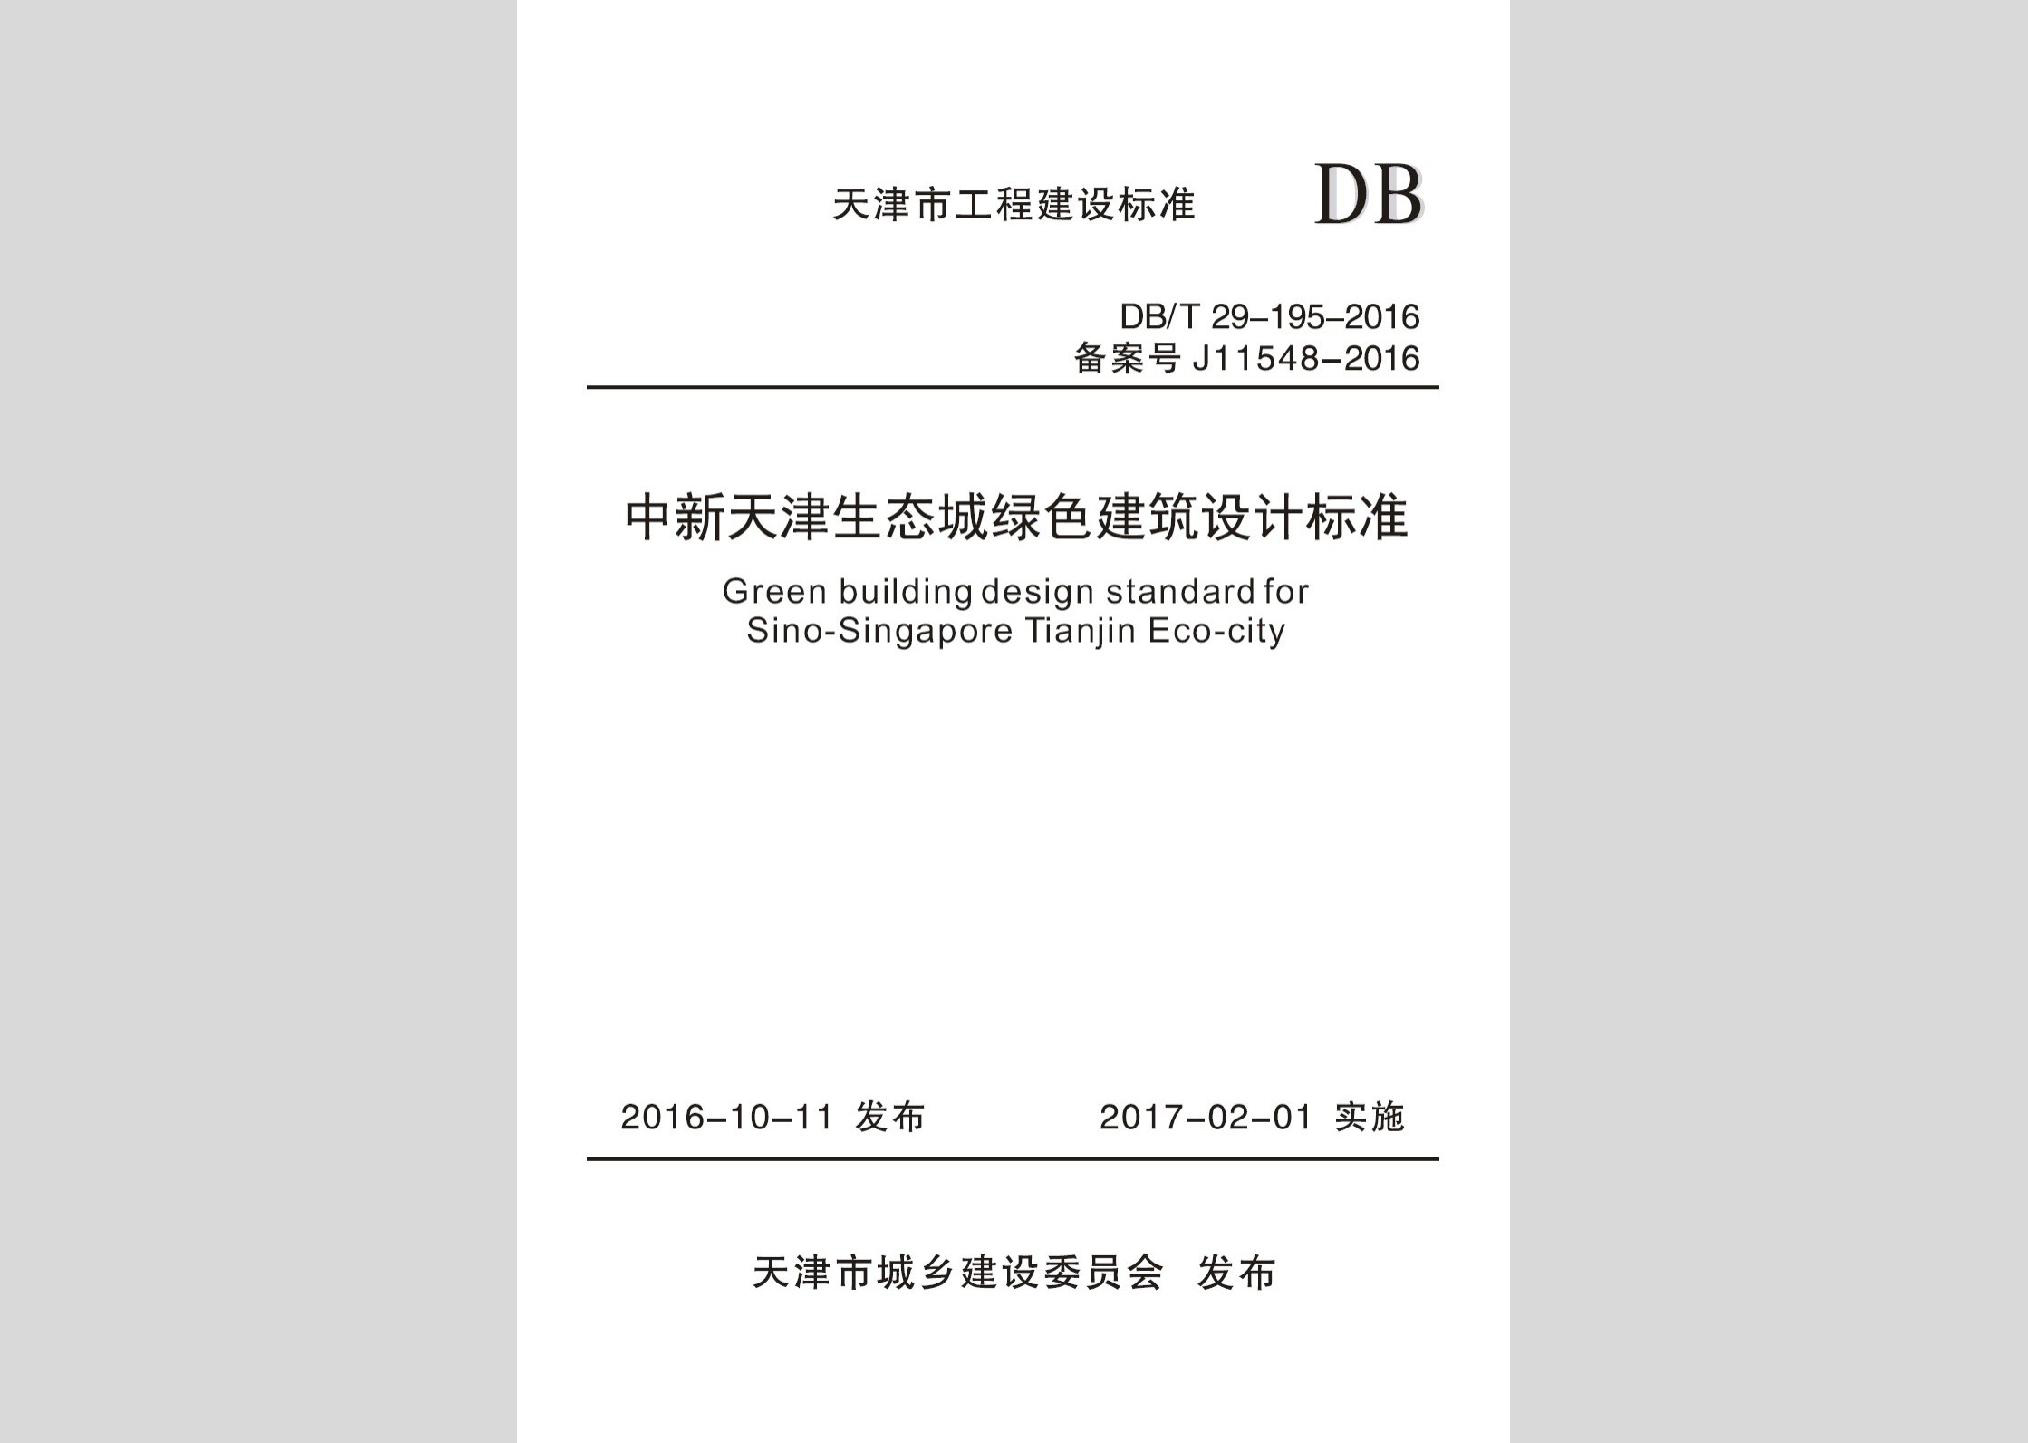 DB/T29-195-2016：中新天津生态城绿色建筑设计标准